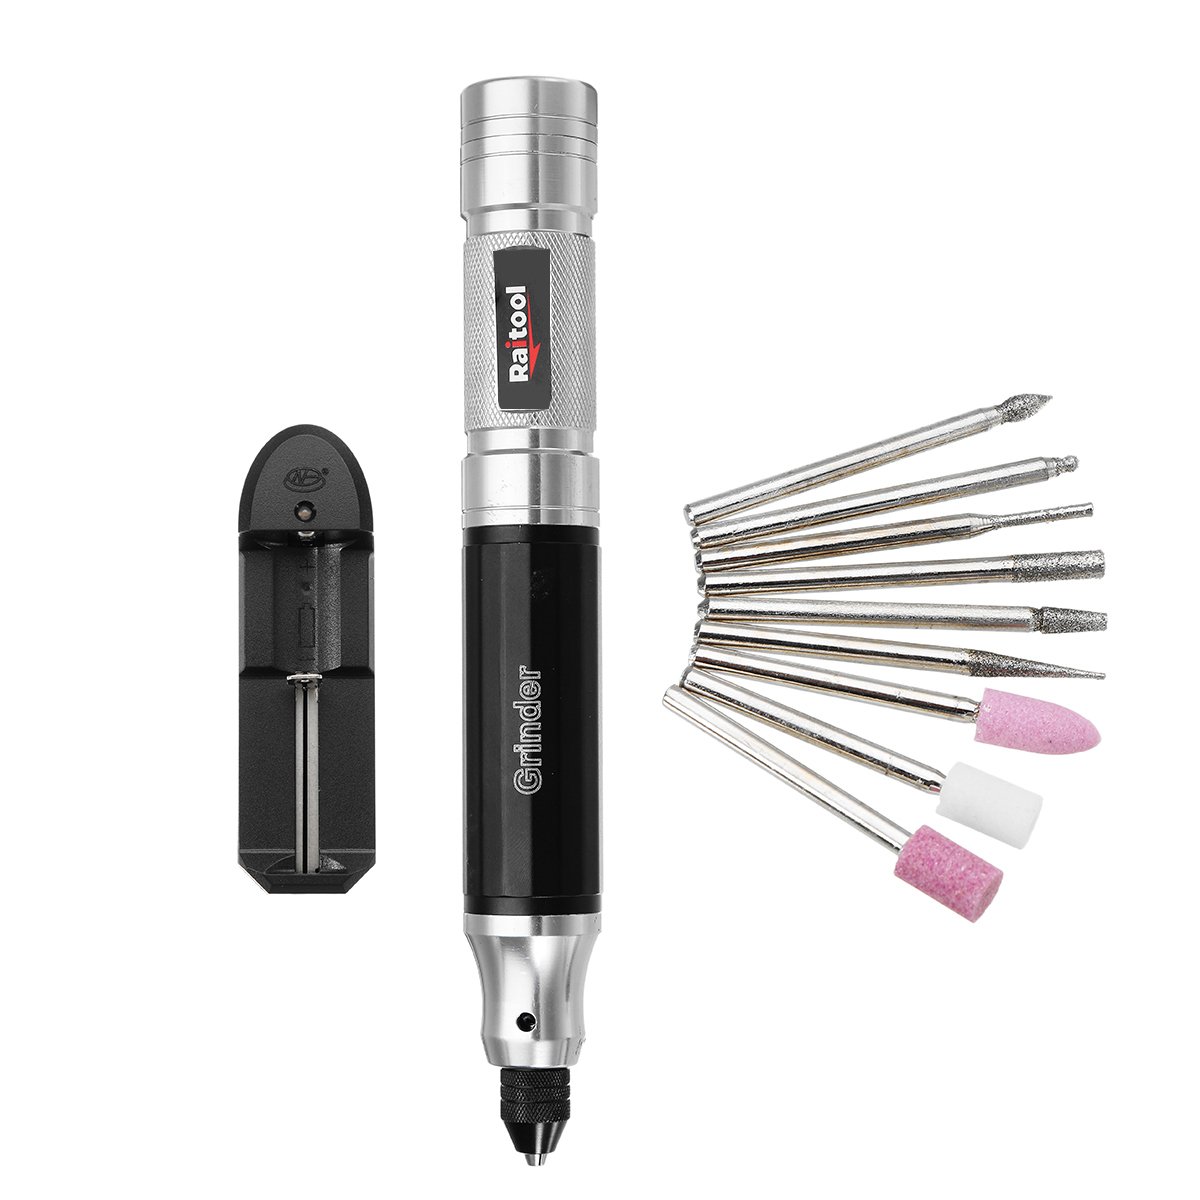 Raitool™ 3.7V 35W Mini Power Drills Electric Grinder Cordless Engraving Pen 2